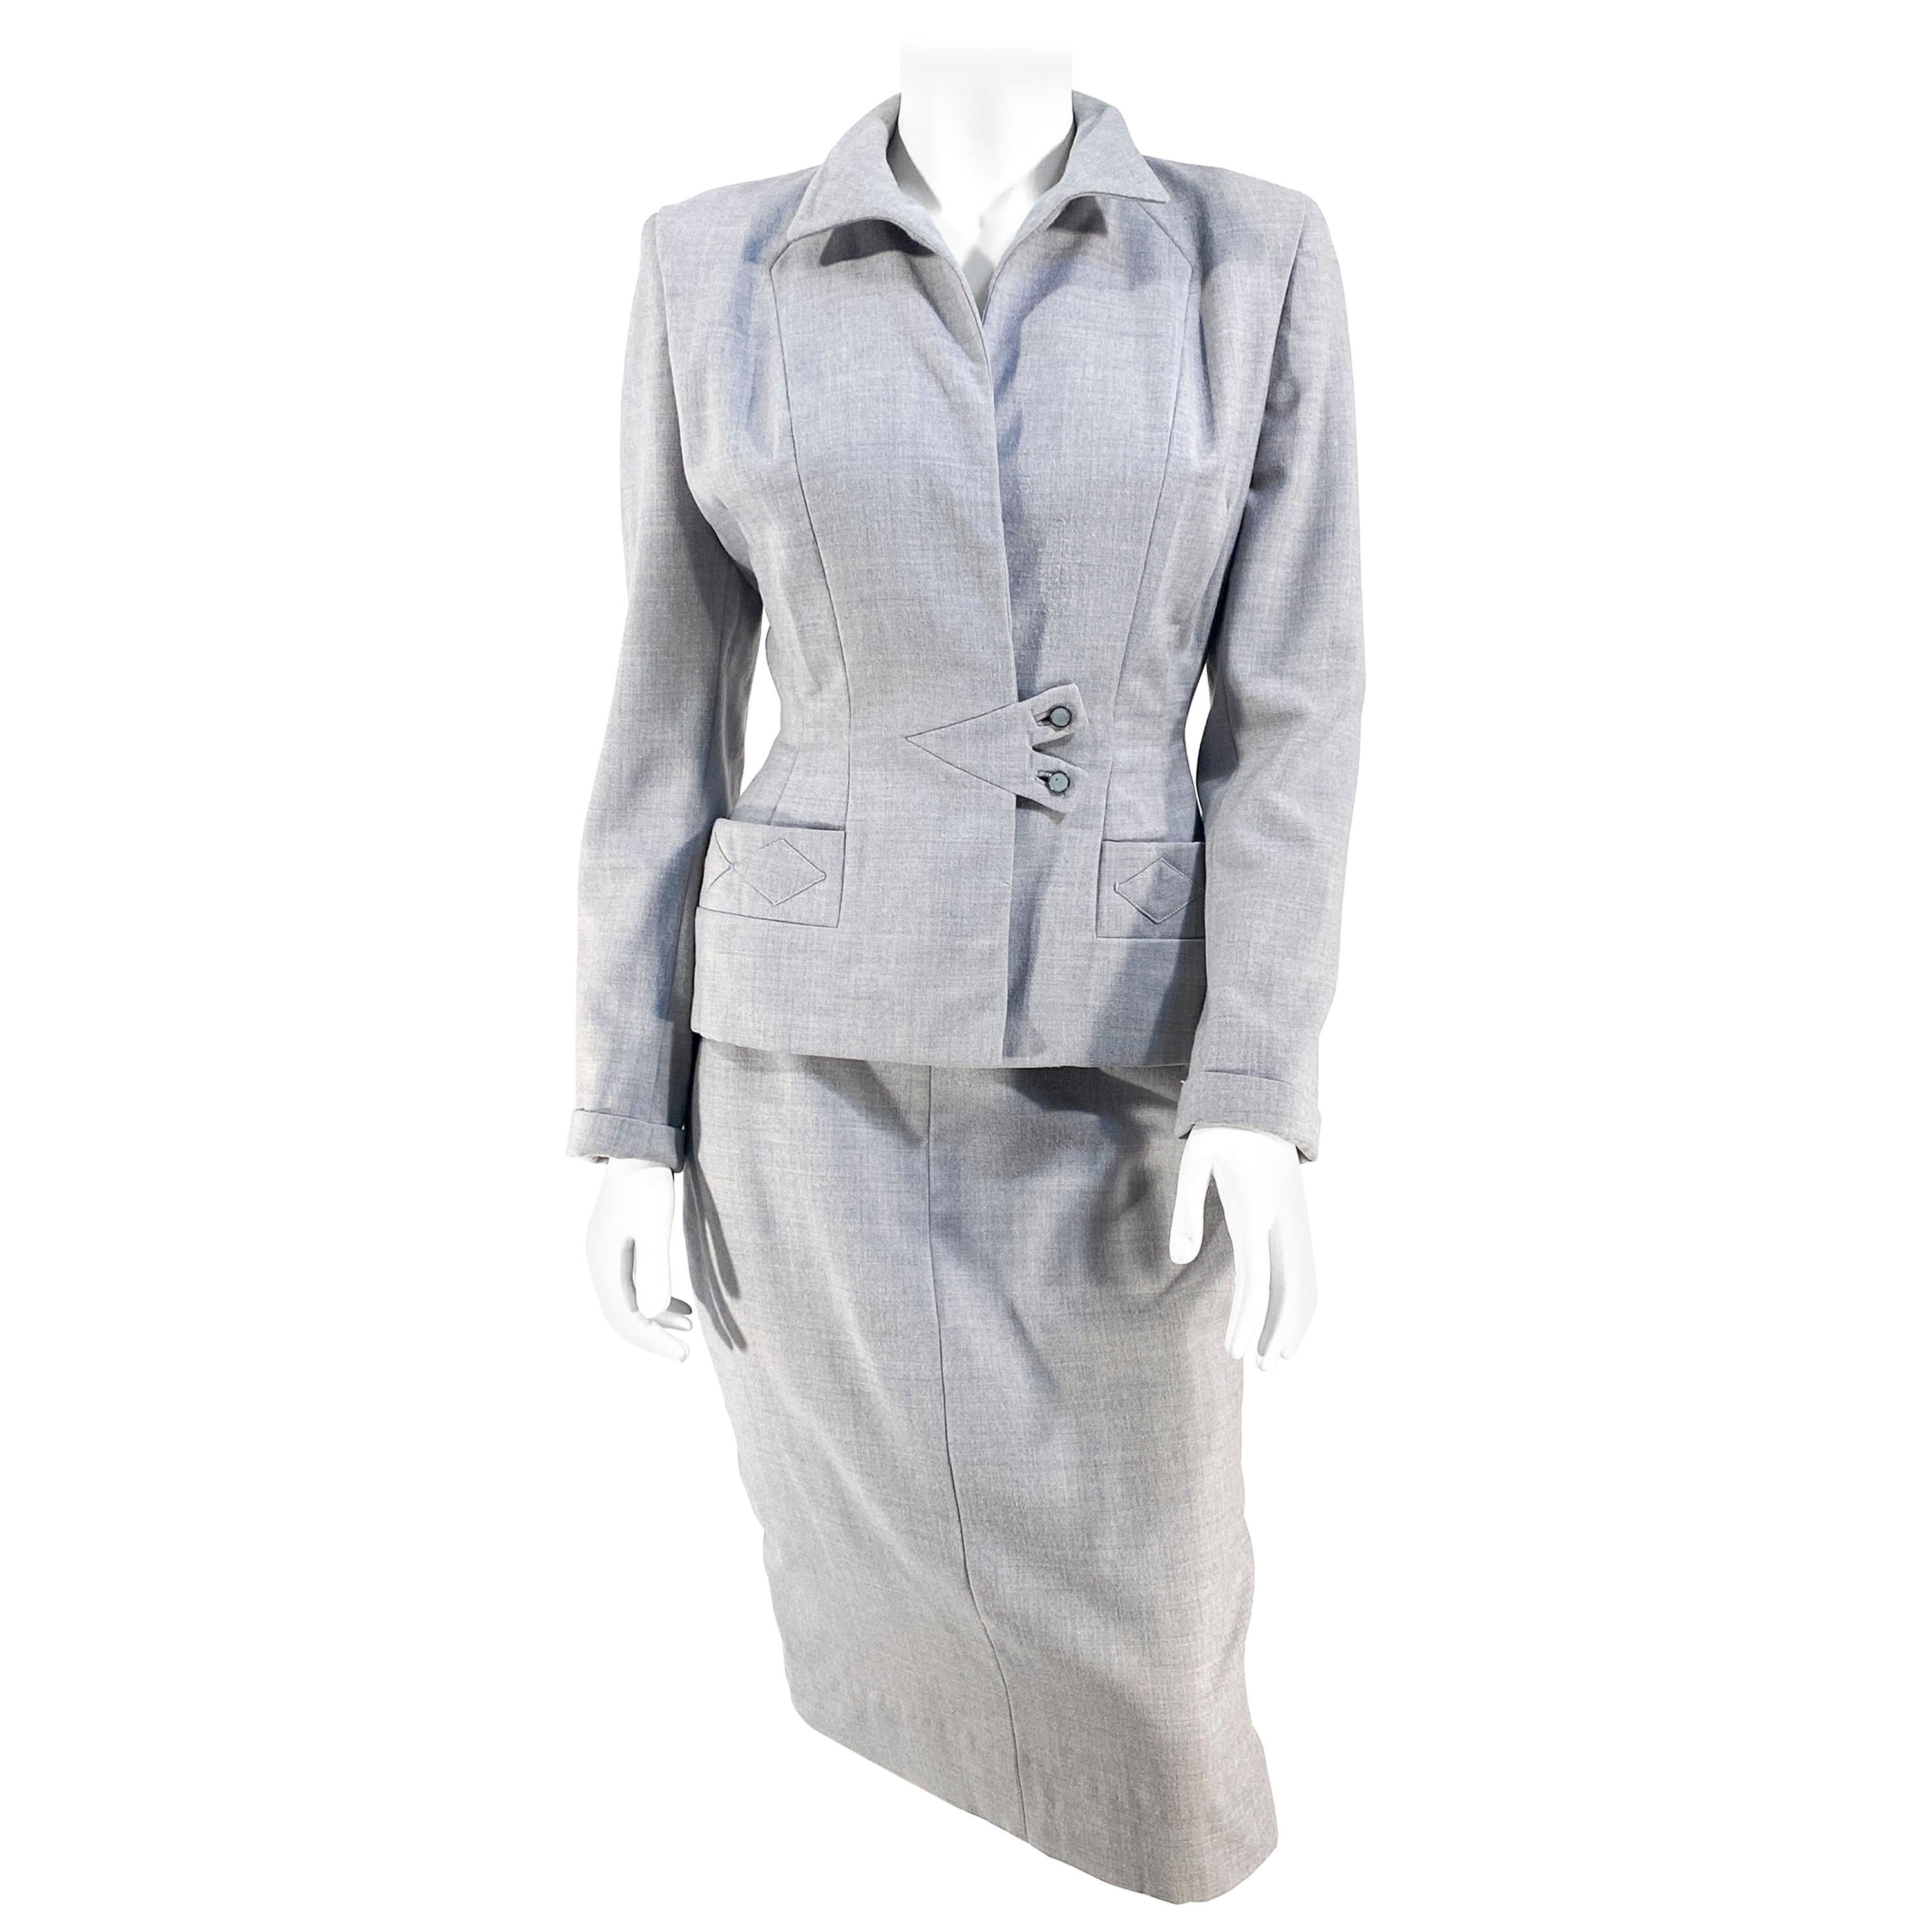 1950s Heather Grey Wool Suit